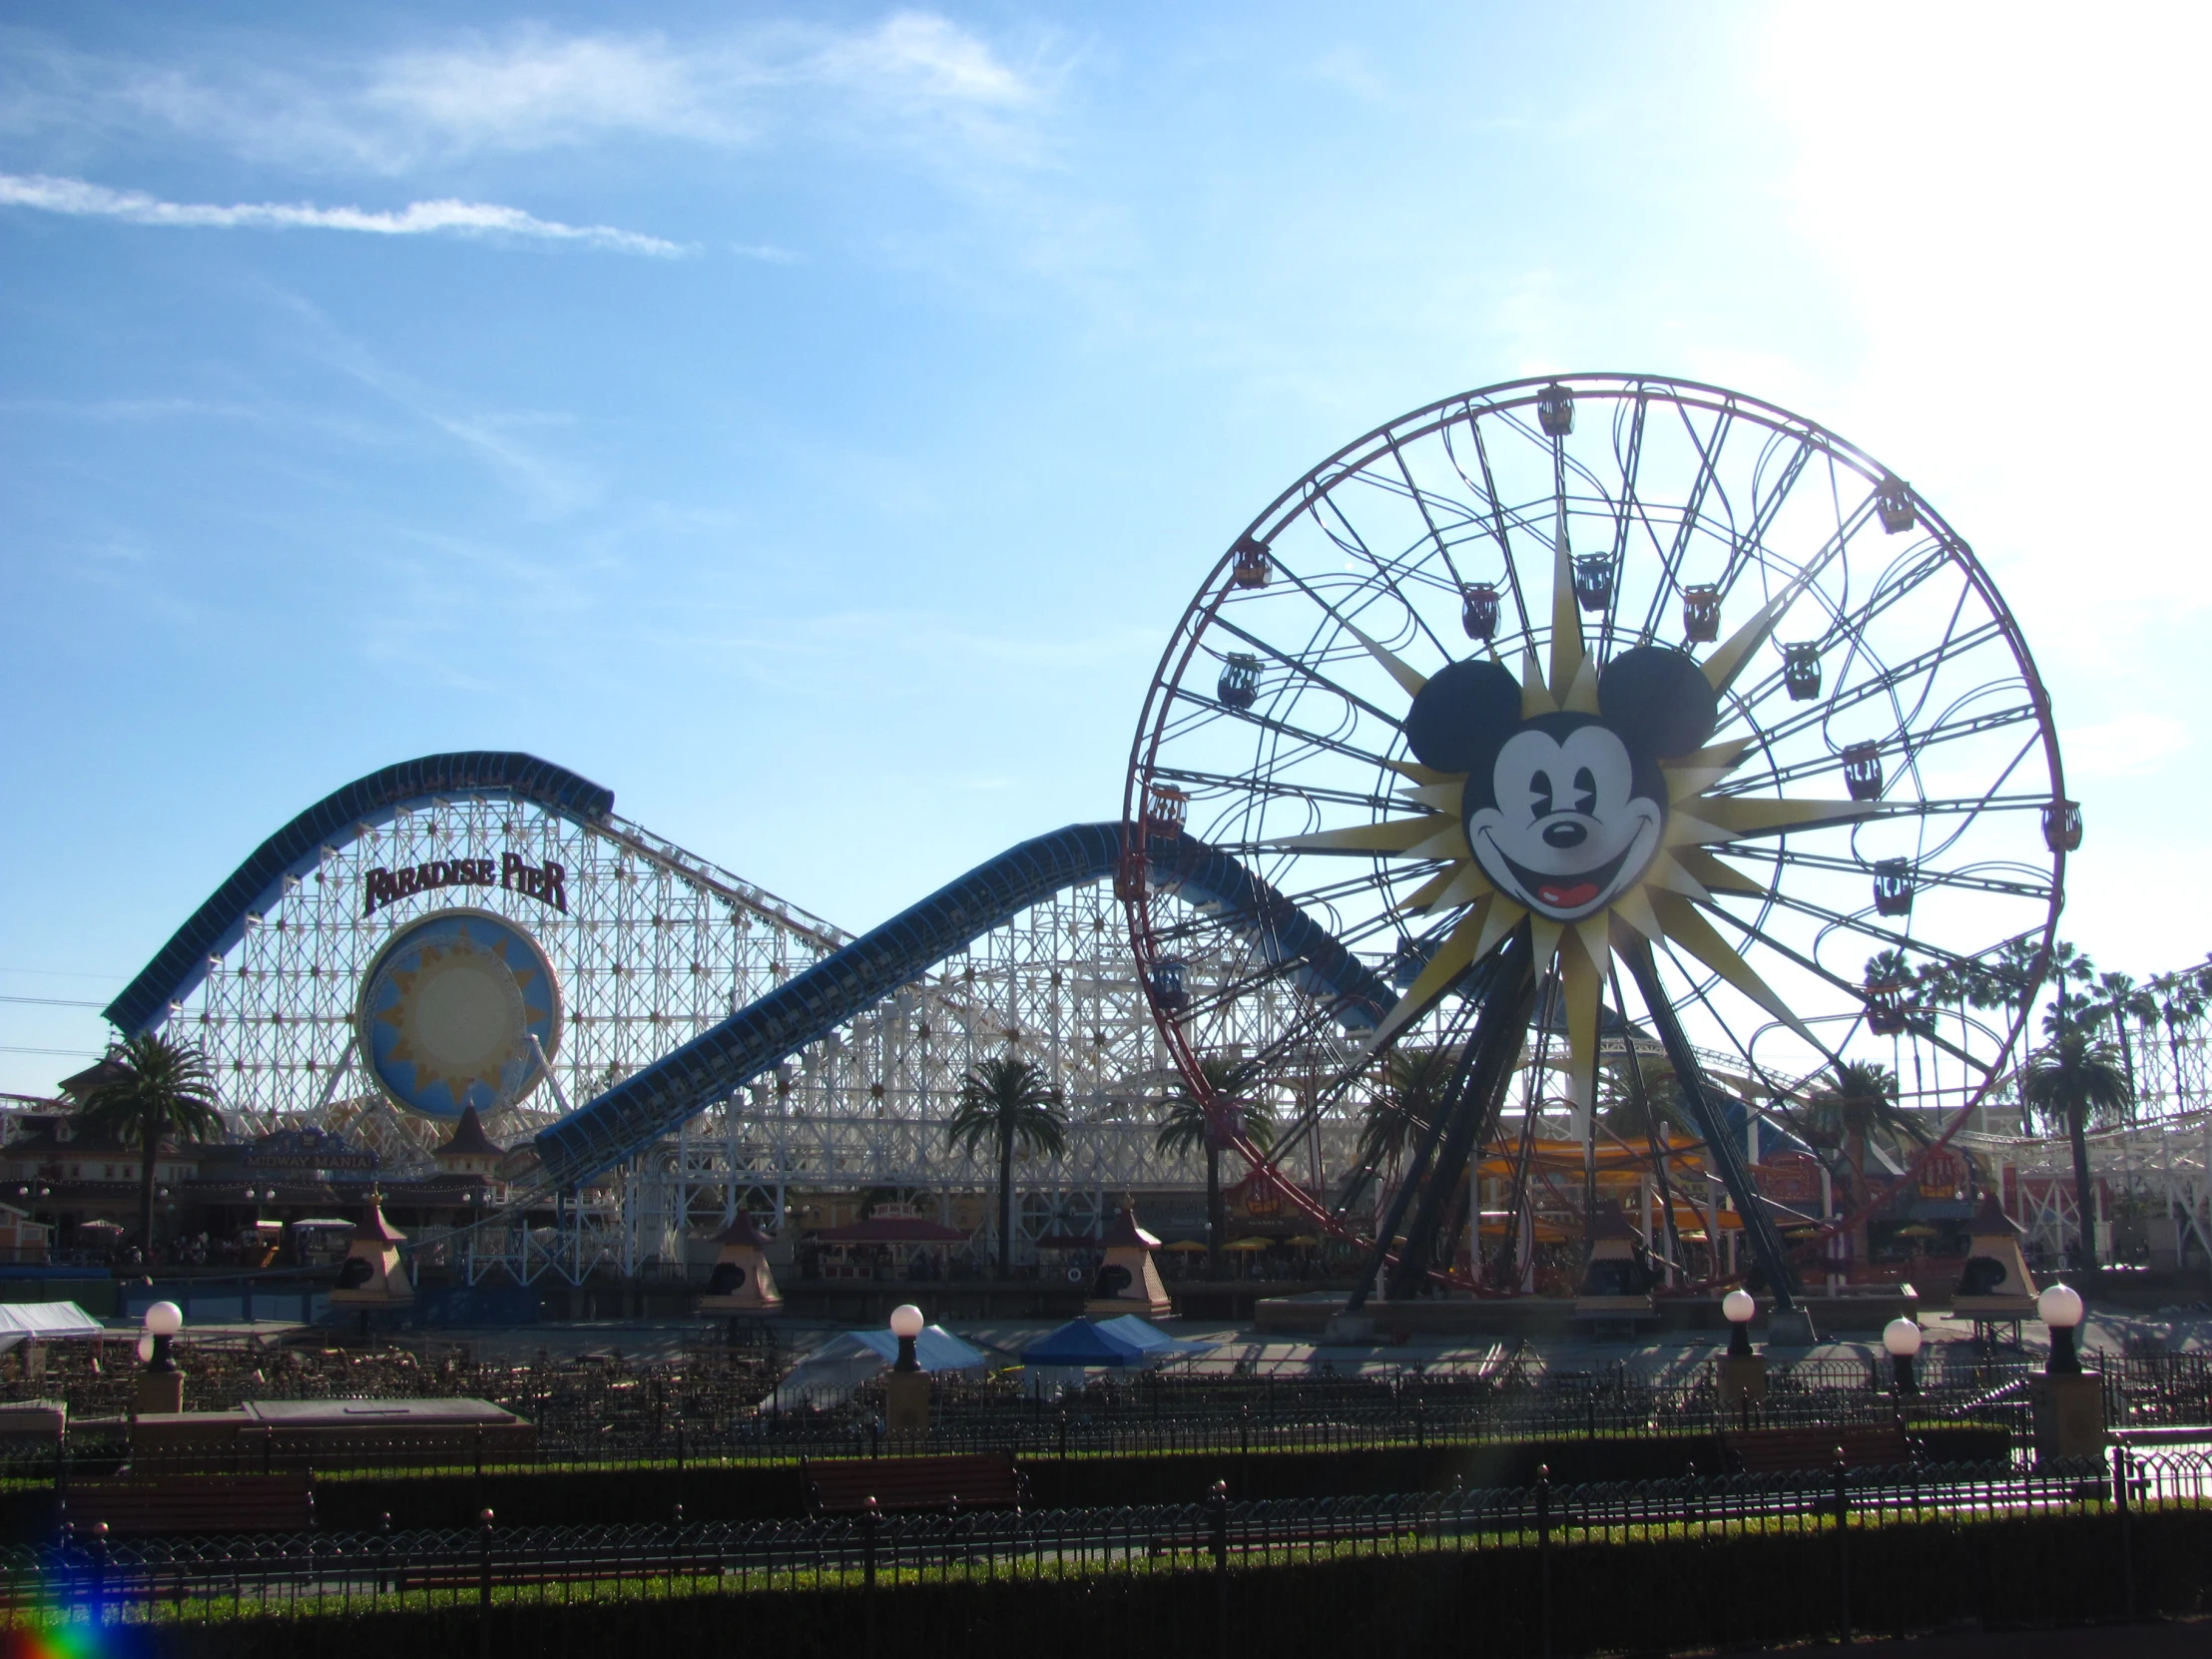 the coaster coaster coaster has mickey mouse on it